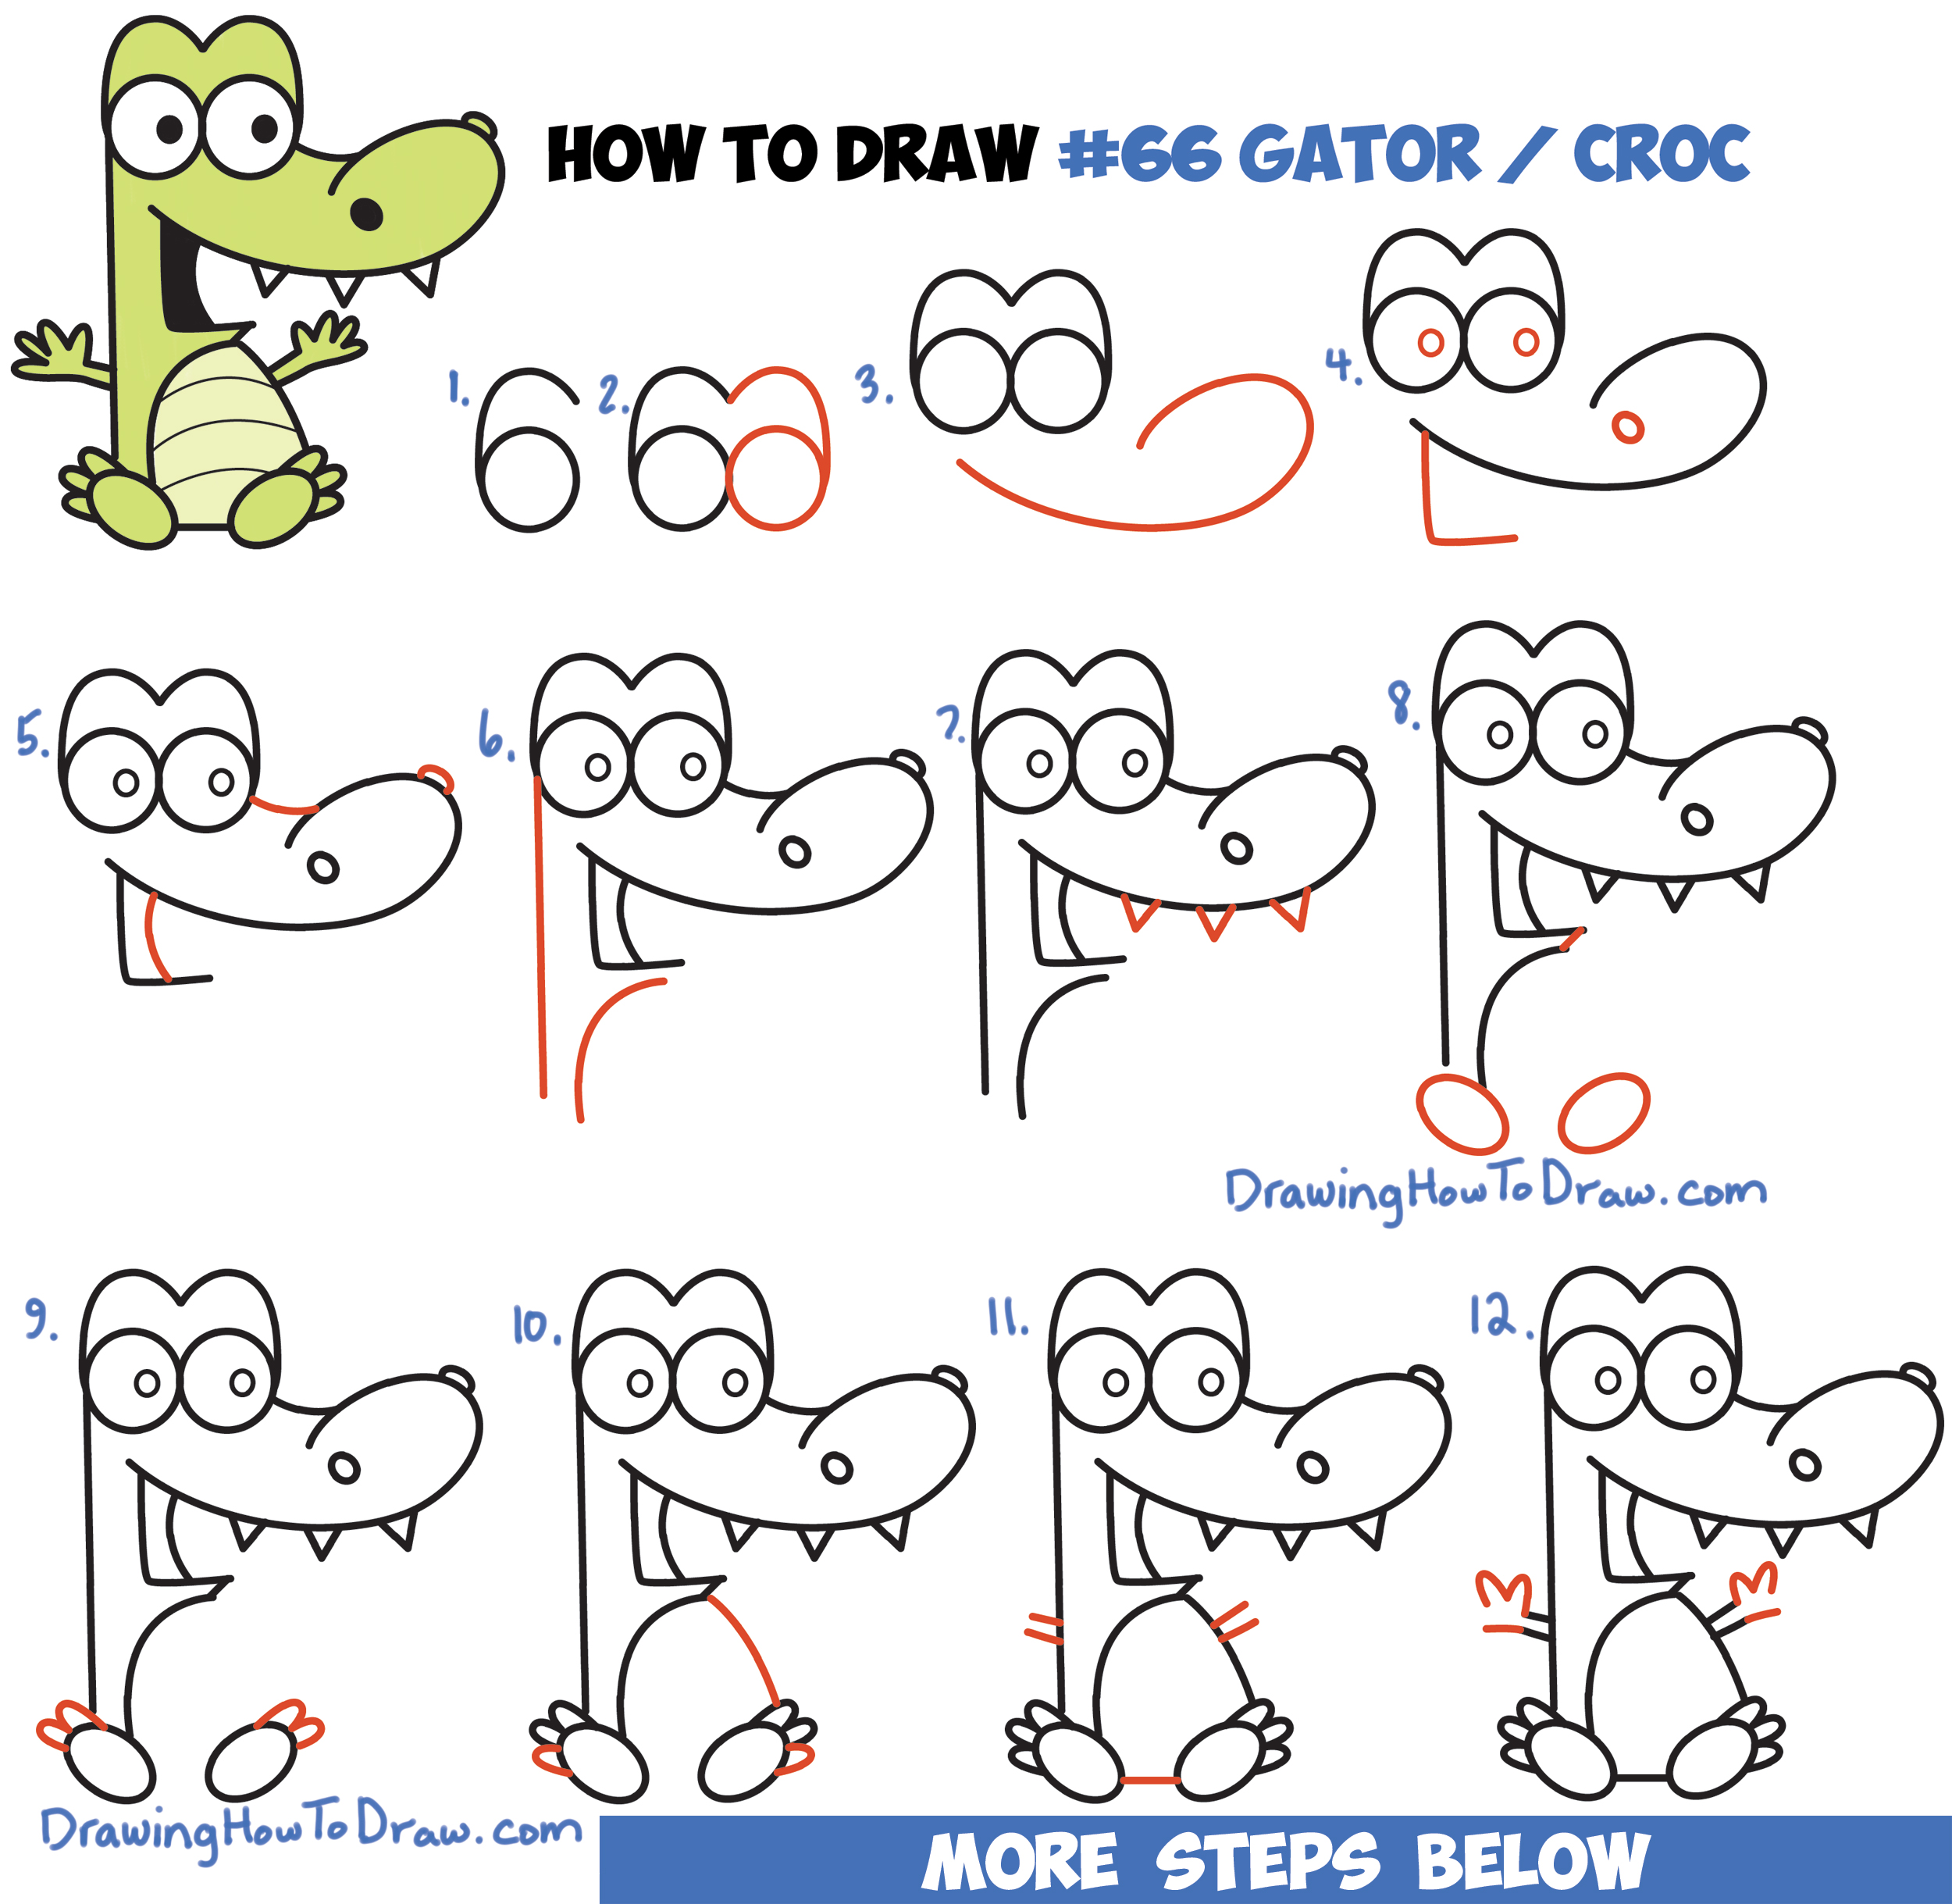 How to Draw a Crocodile | Design School